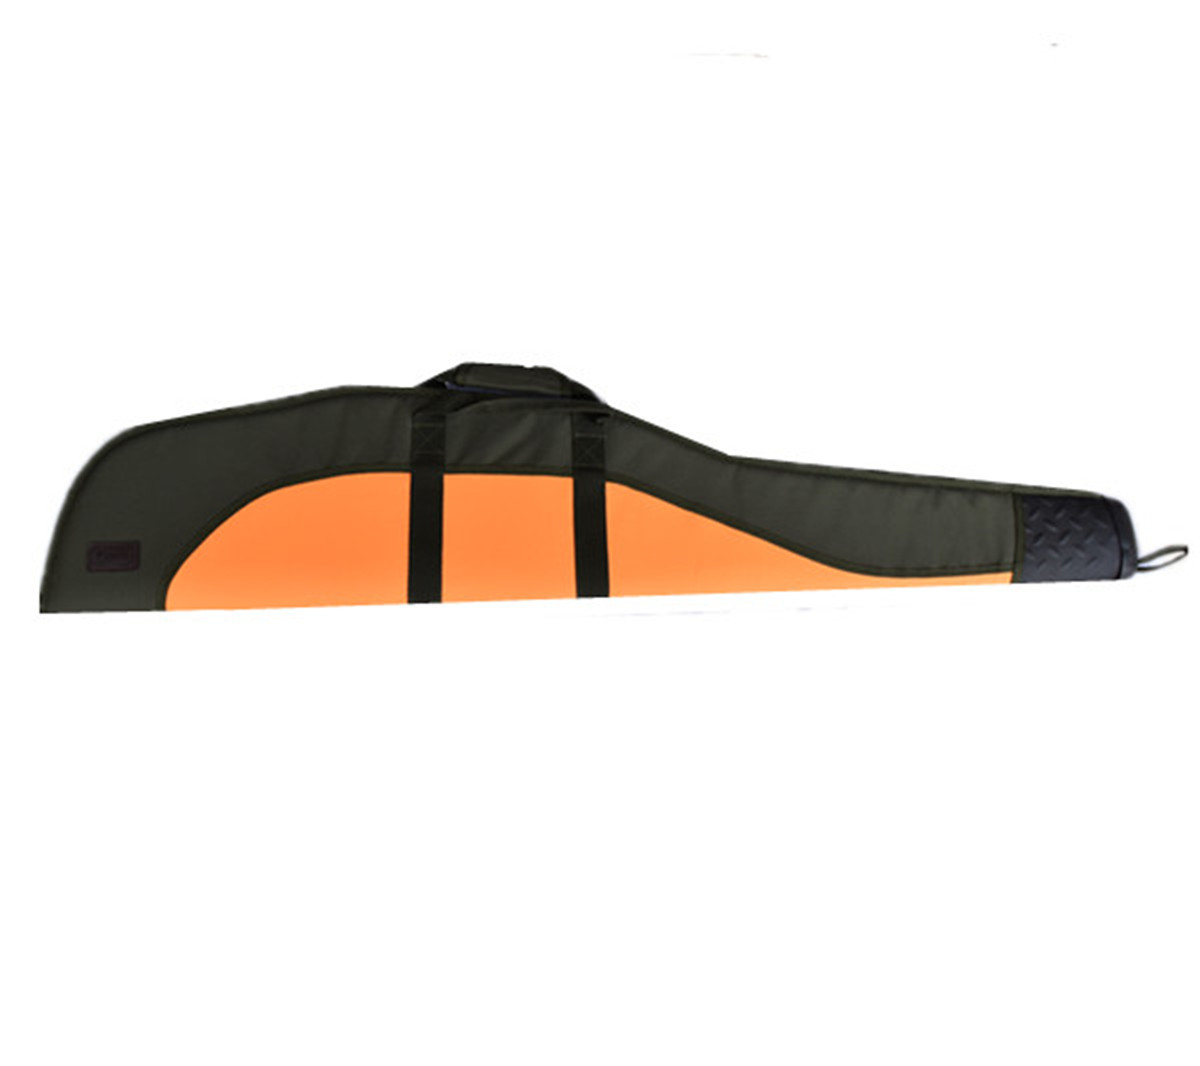 Hunting Shooting waterproof oxford rifle bag 50 inch